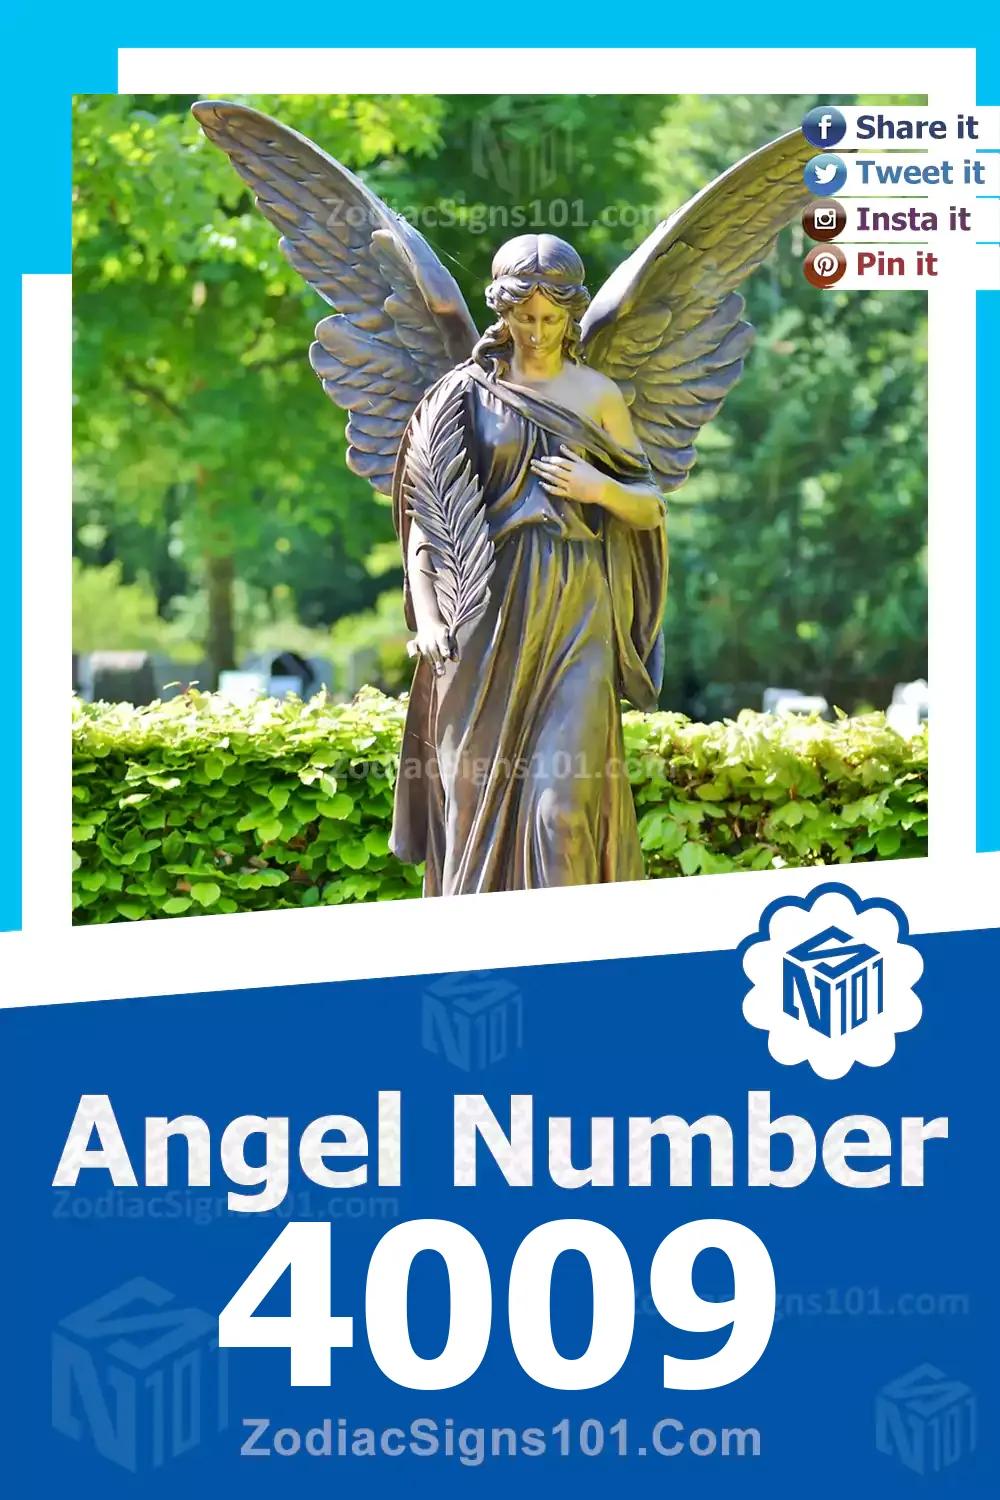 4009-Angel-Number-Meaning.jpg